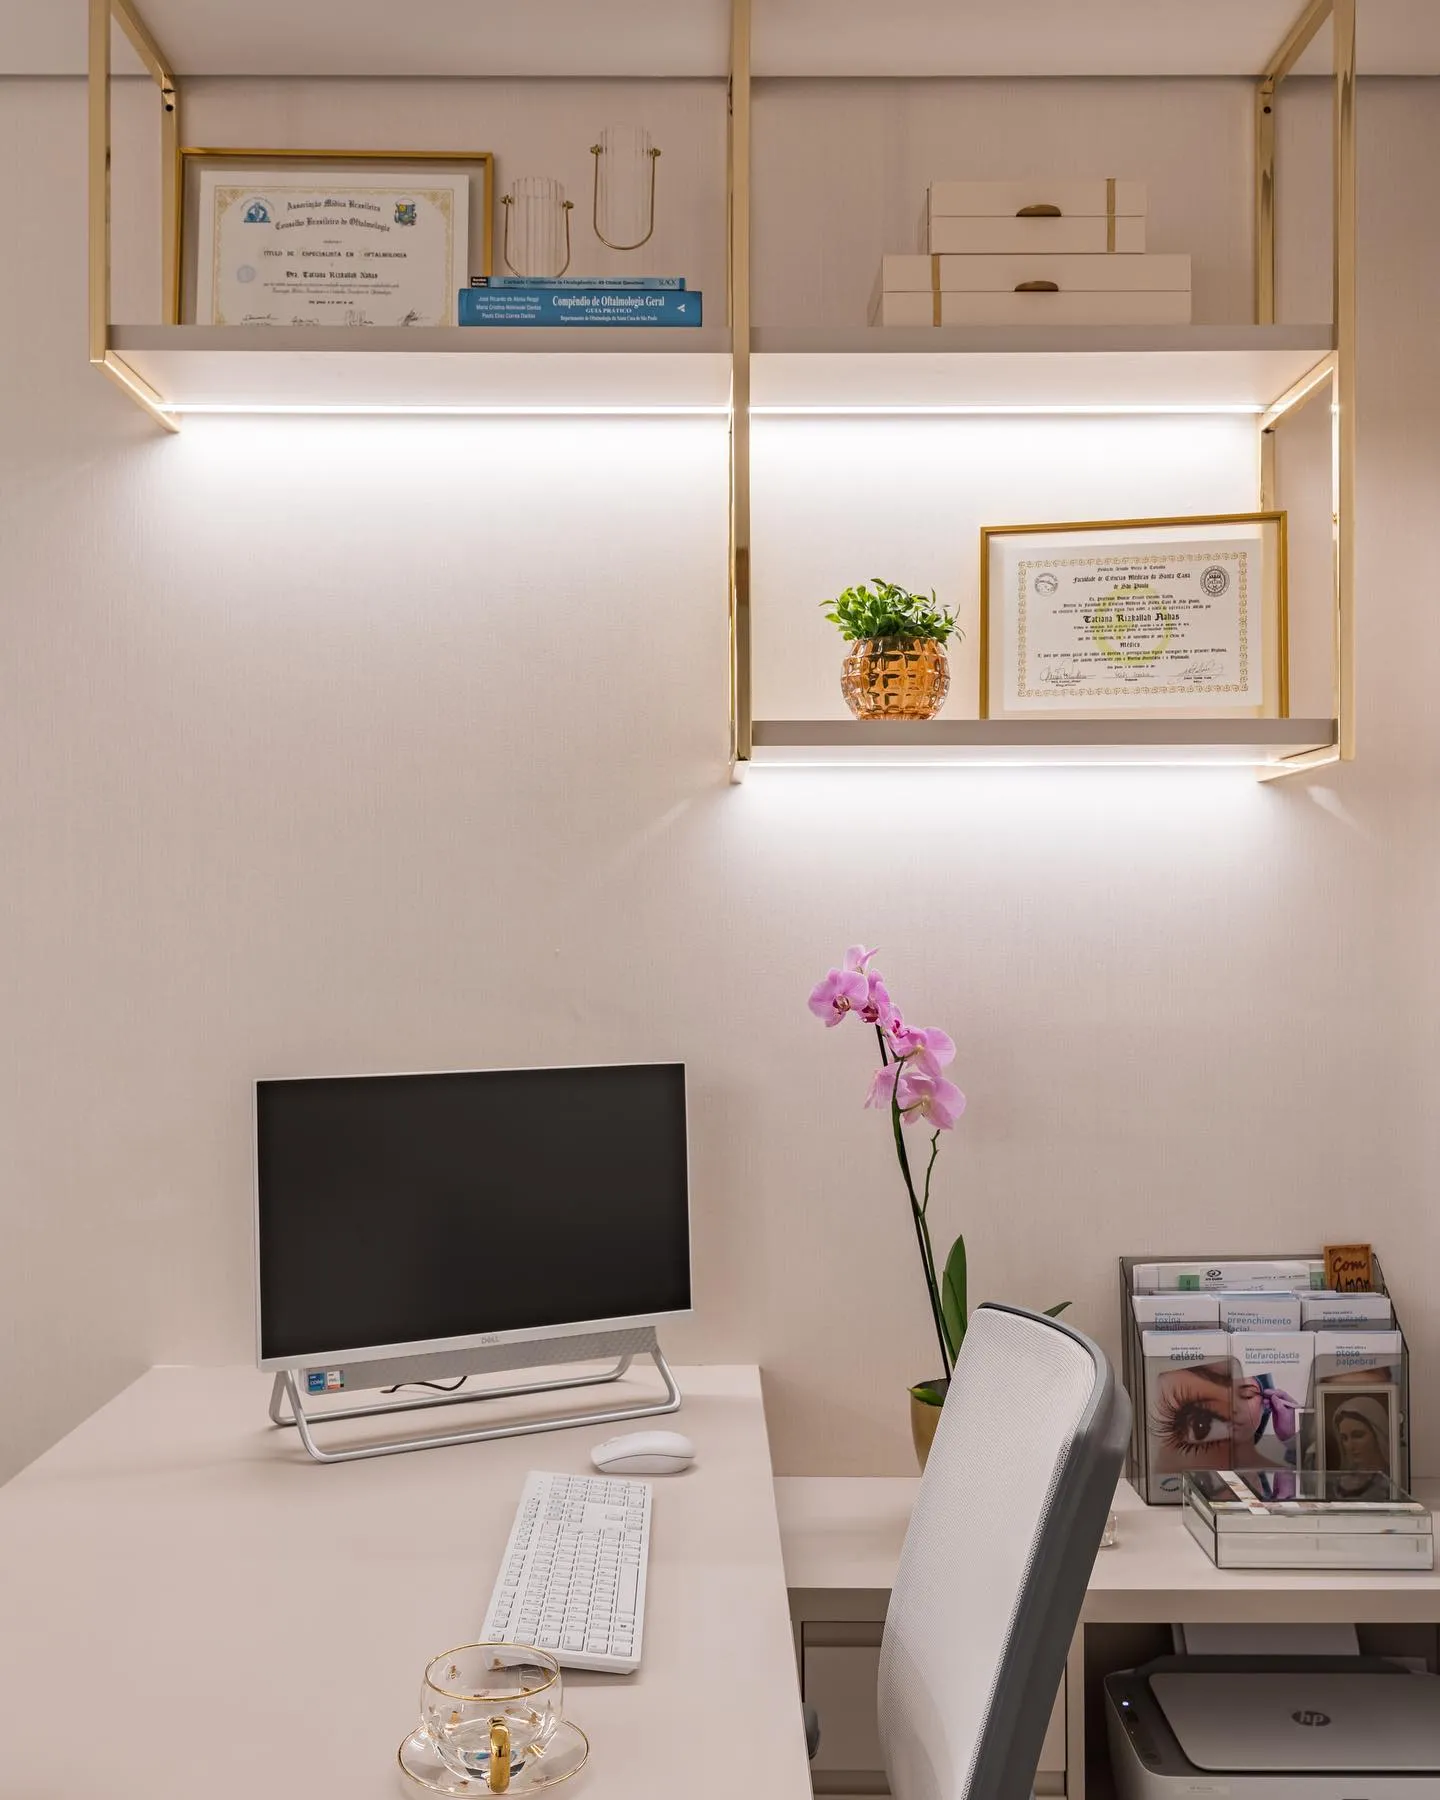 100 ideas de decoración de oficina en casa para arreglar tu rincón